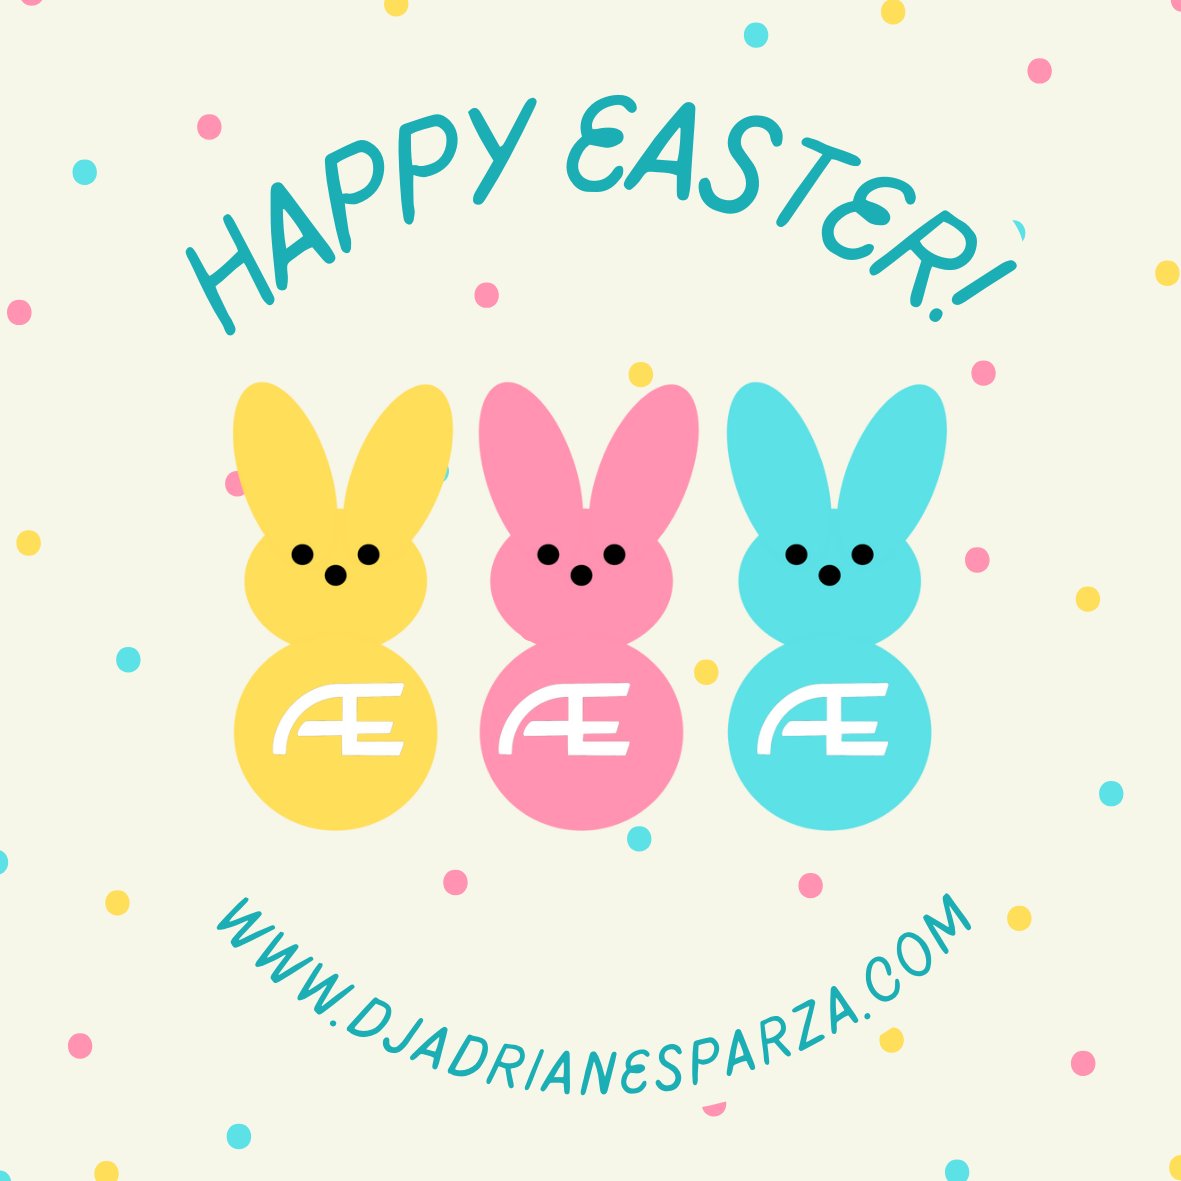 Happy Easter! 

#happinessproducer #crowdmover #eventdj #bilingualdj #illinoisdj #DJinChicago #Entertainment